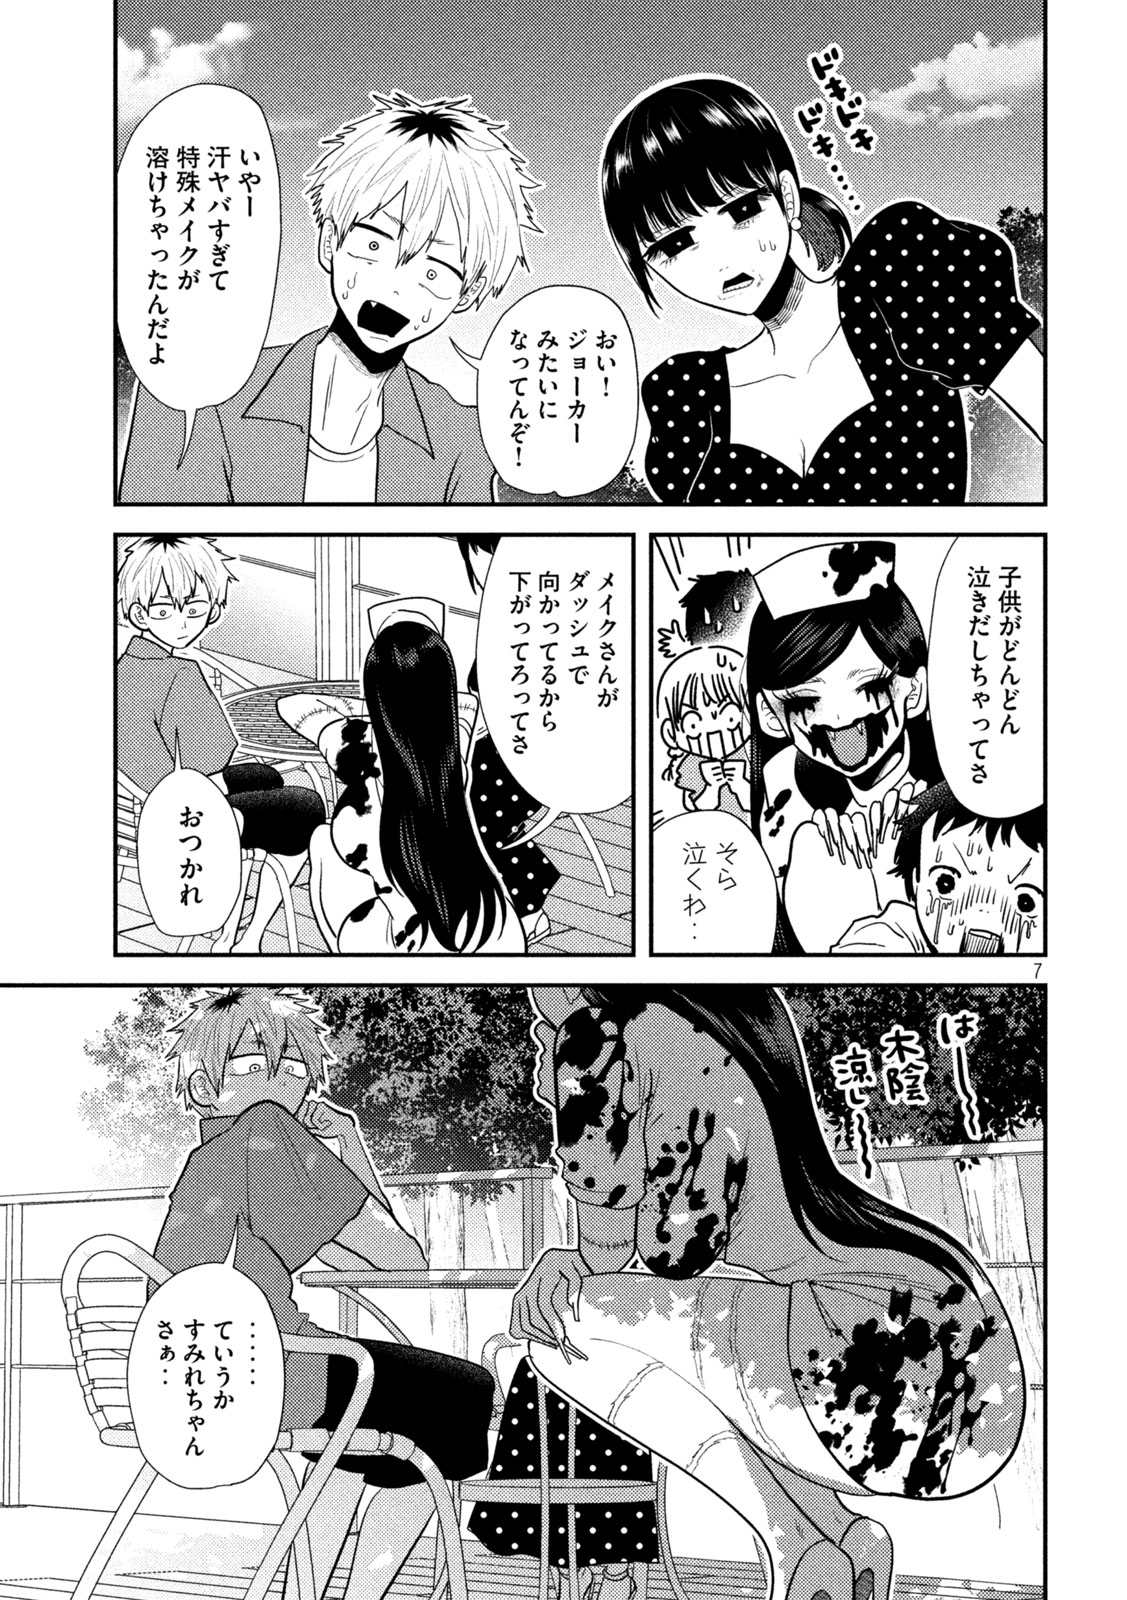 Heisei Haizanhei Sumire-chan - Chapter 22 - Page 7